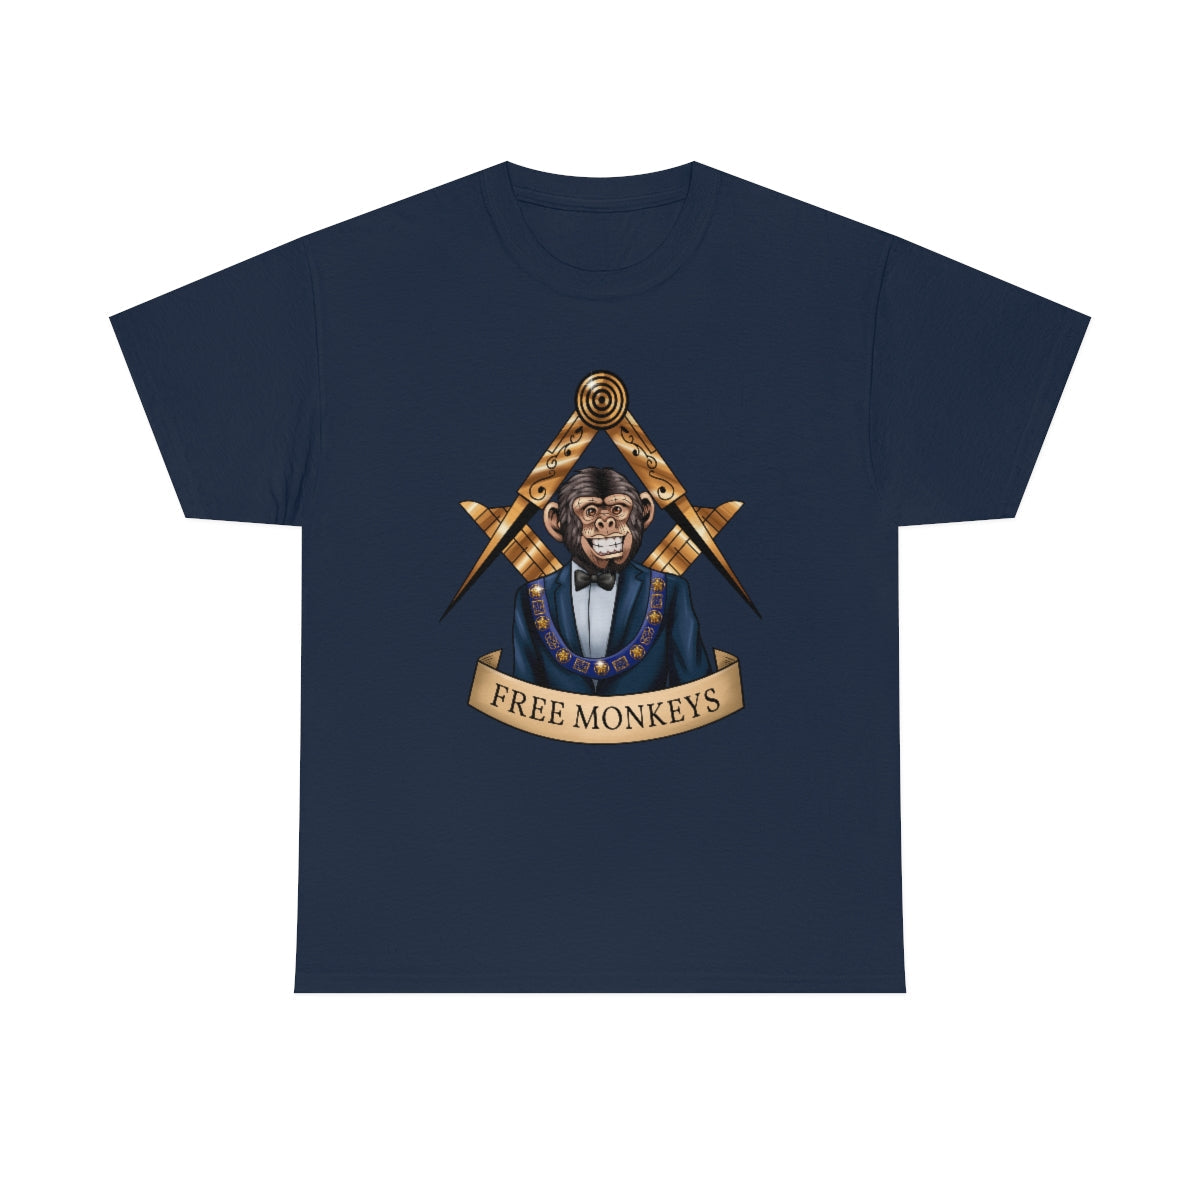 Free Monkeys - T-Shirt T-Shirt Artworktee Navy Blue S 